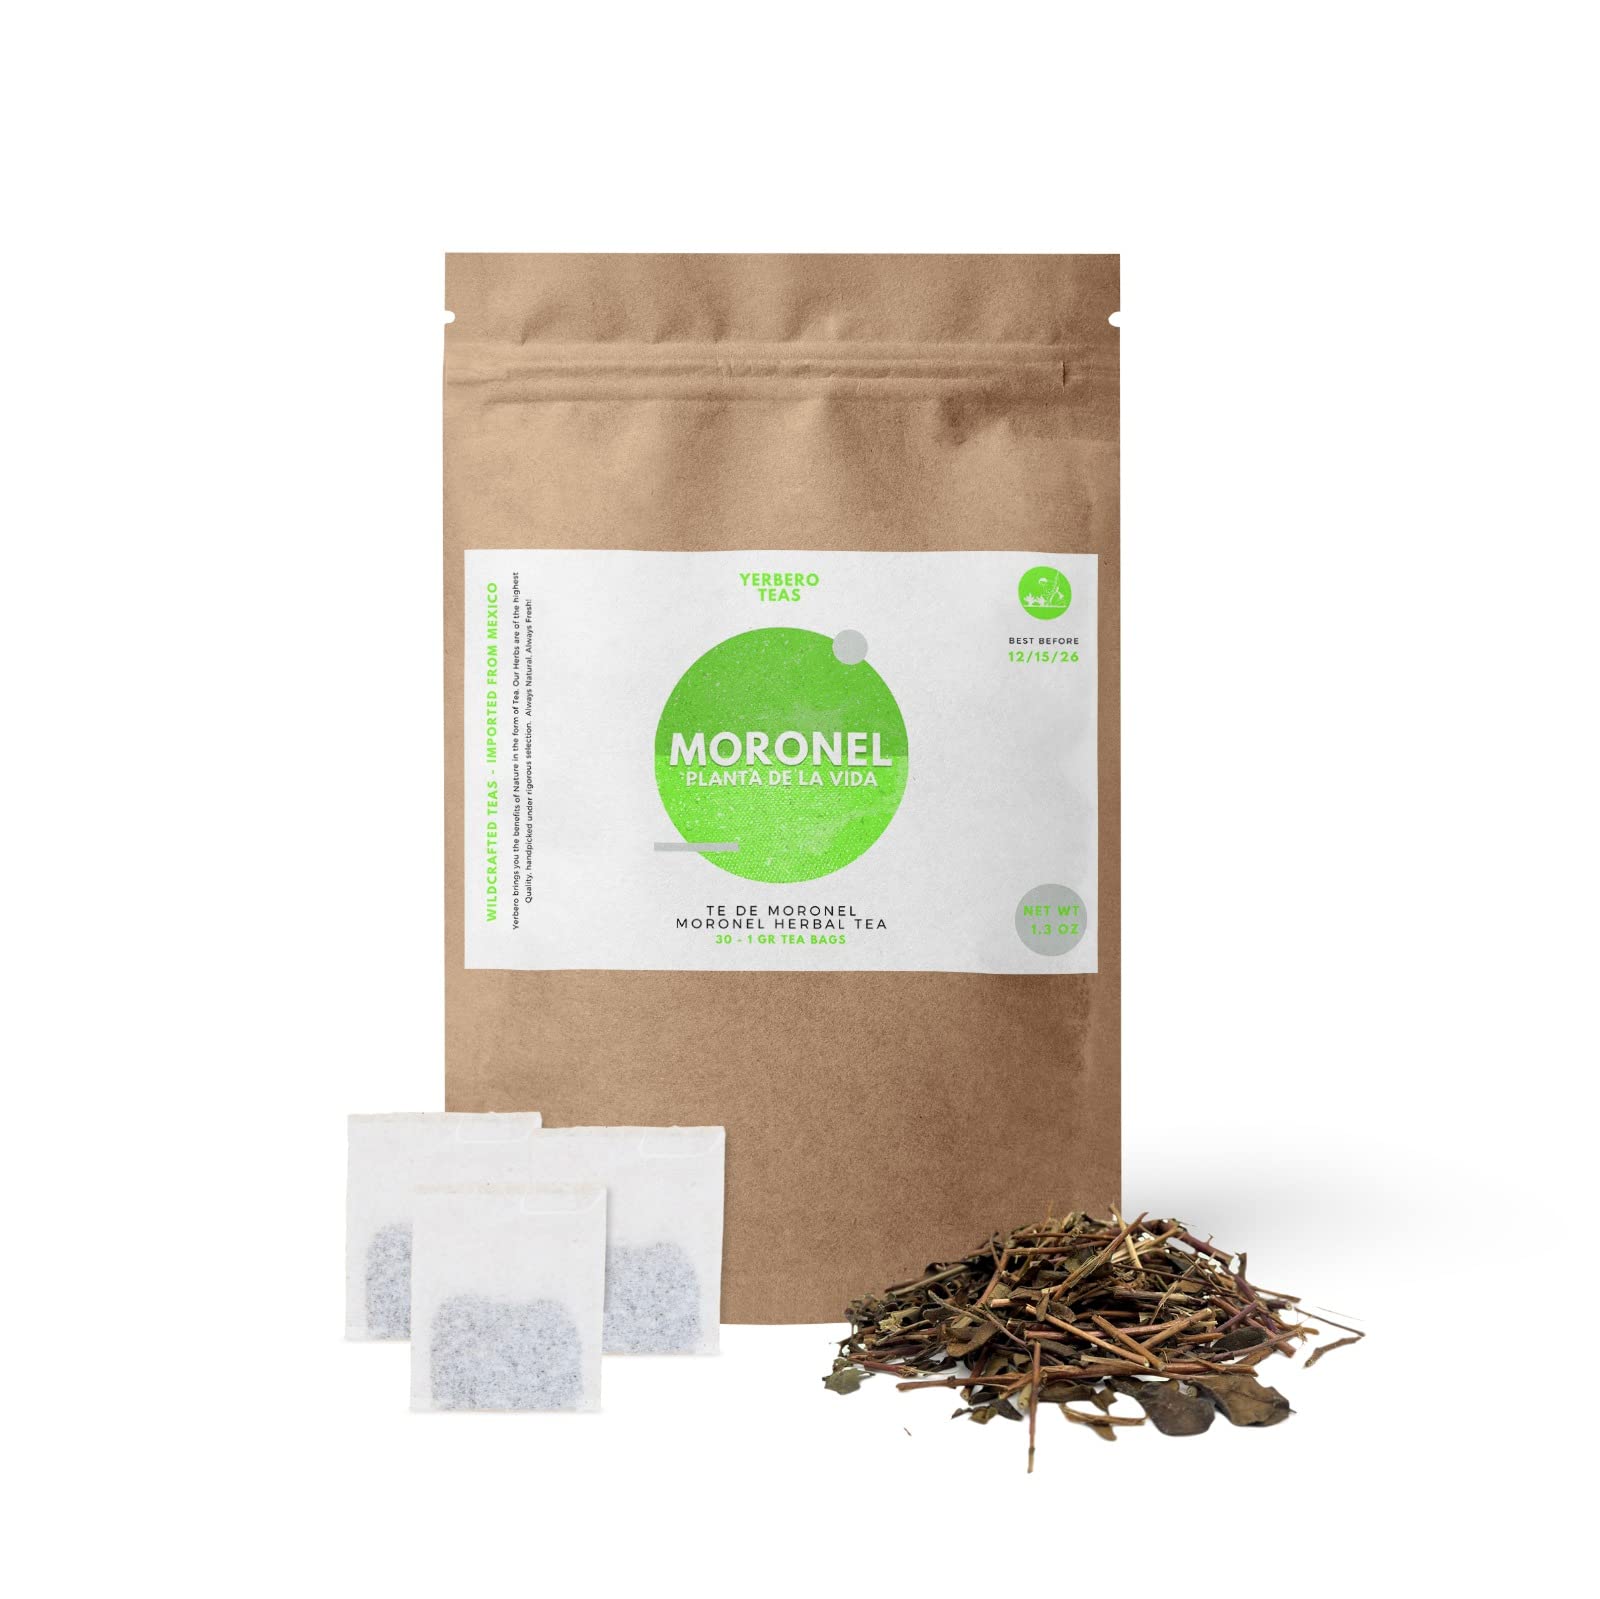 Yerbero - Moronel(Planta De La Vida) 30 Tea Bags 1gr (0.03oz) - Net WT 30gr (1.3oz) | Stand Up Resealable Bag | Crafted By Nature100% All Natural, non-GMO, Gluten-free.